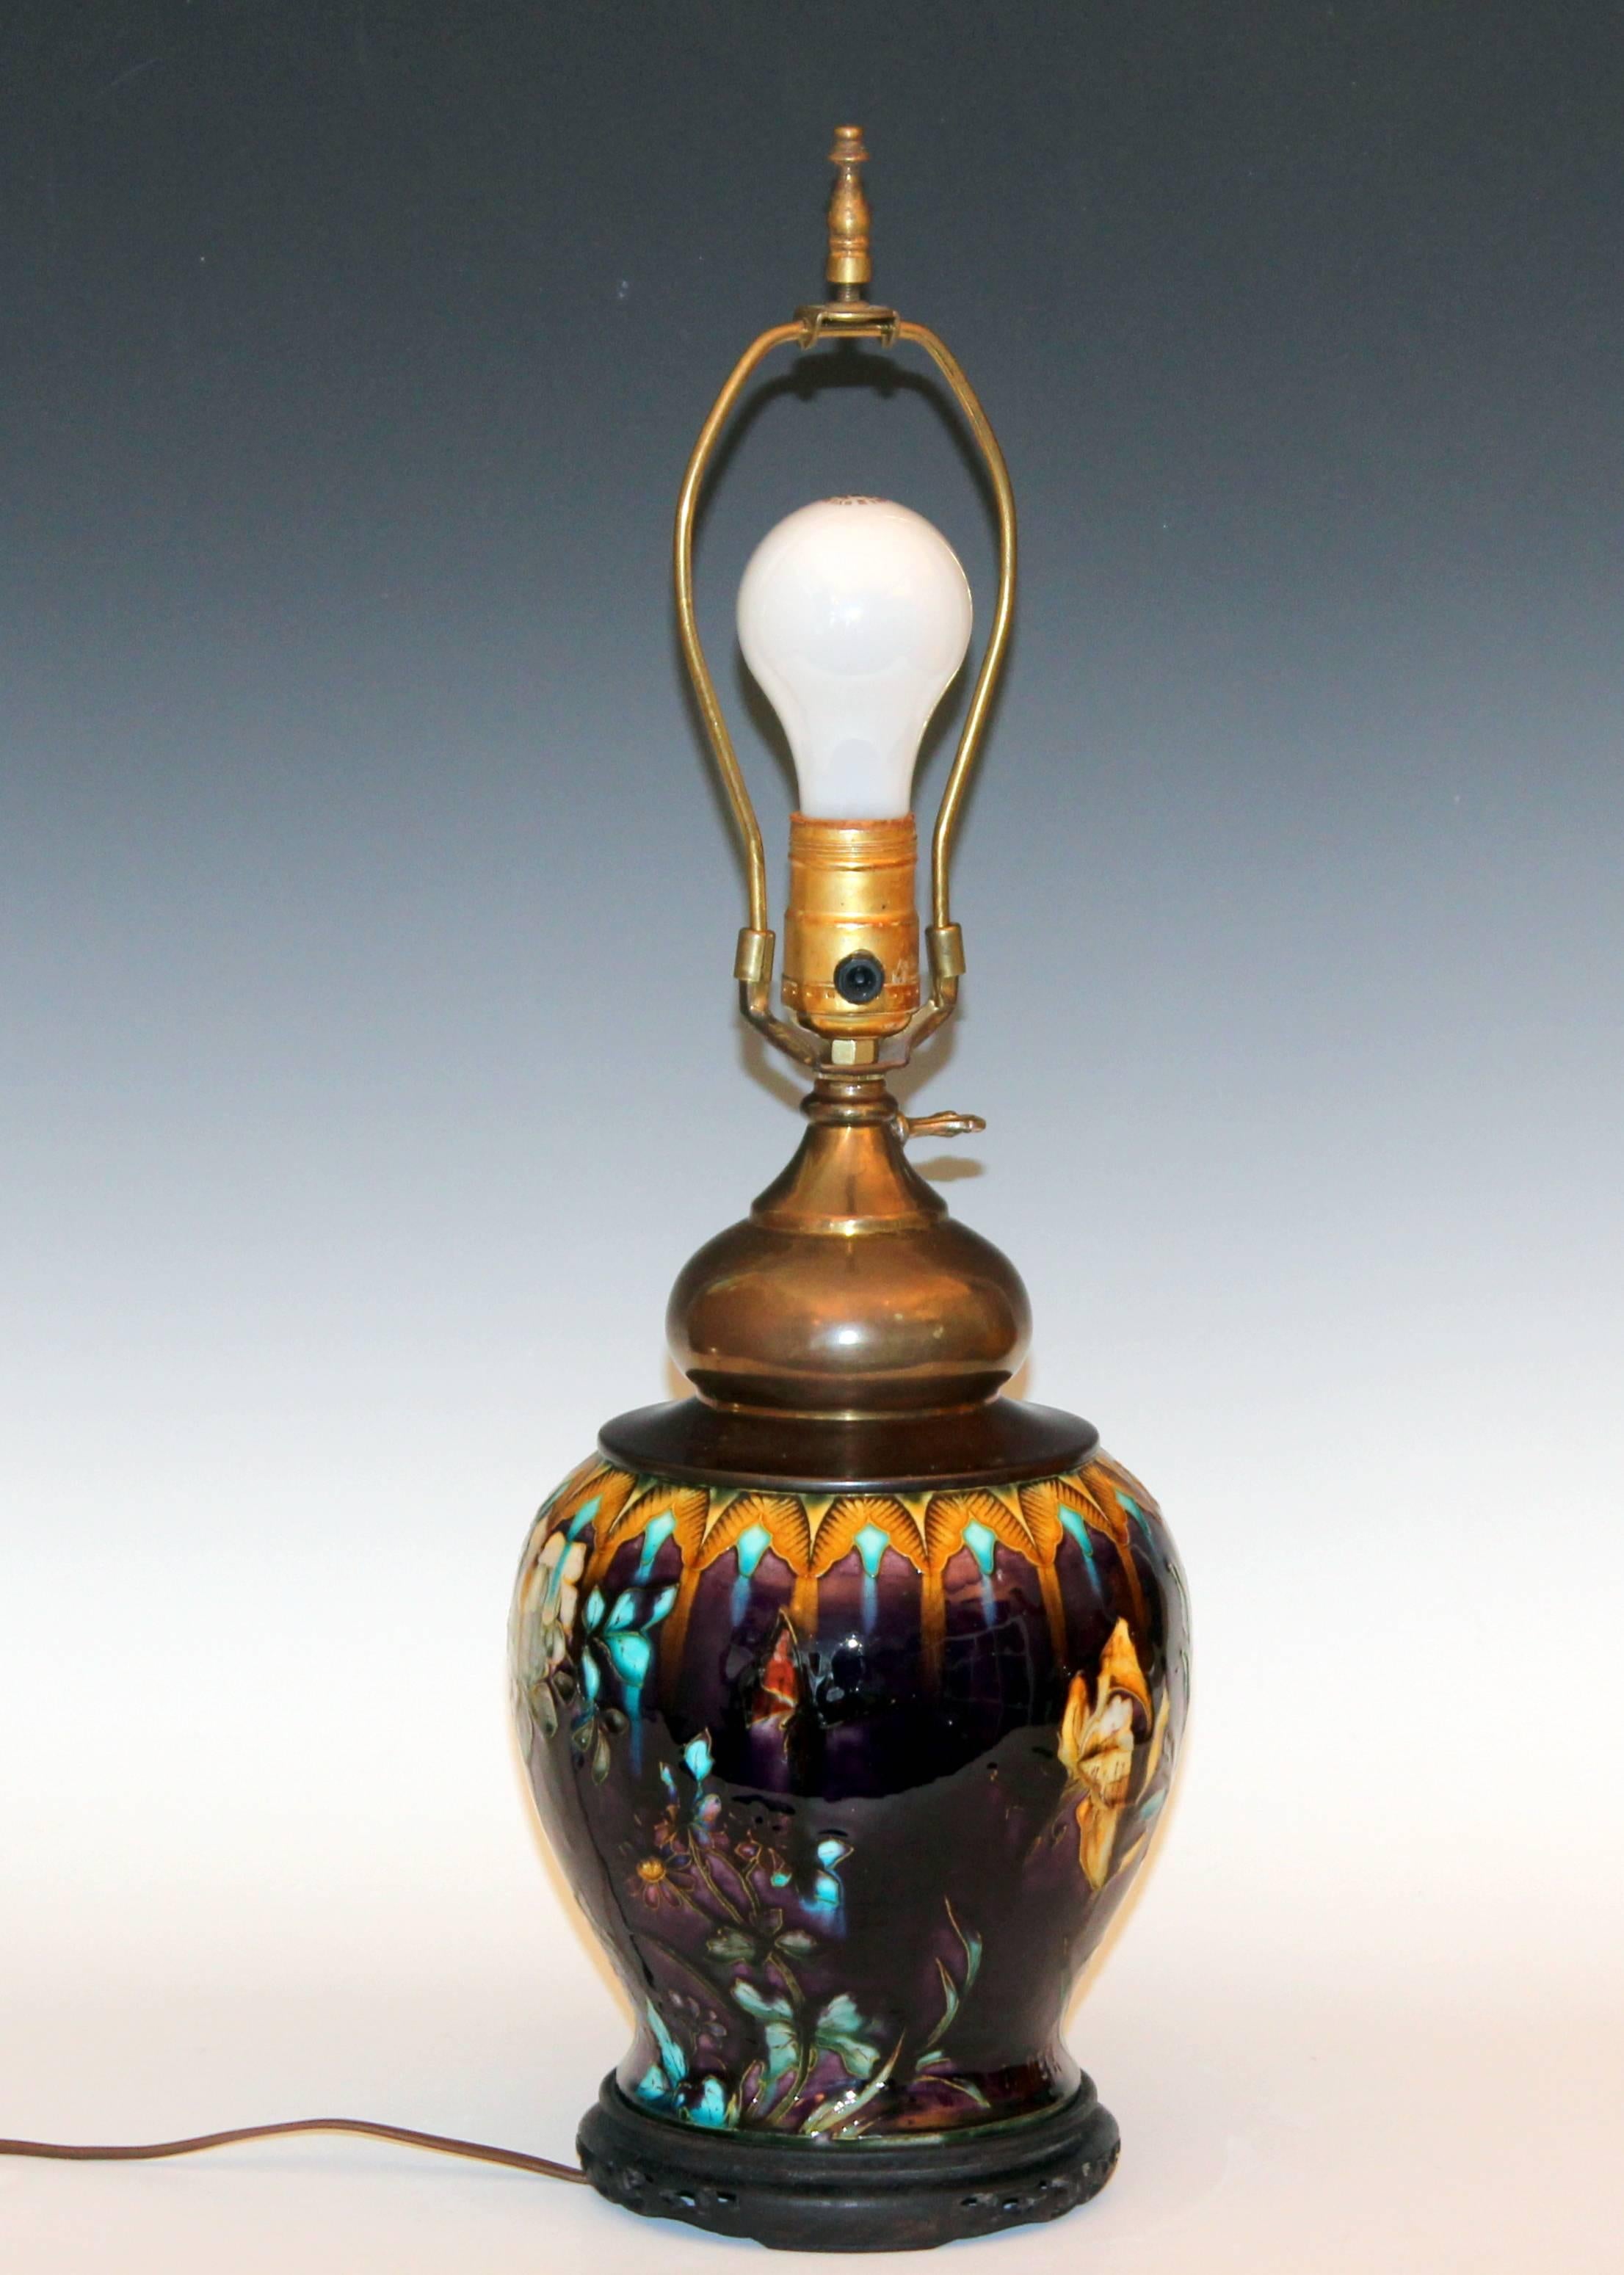 Late 19th Century Antique Theodore Deck French Converted Kerosene Lamp